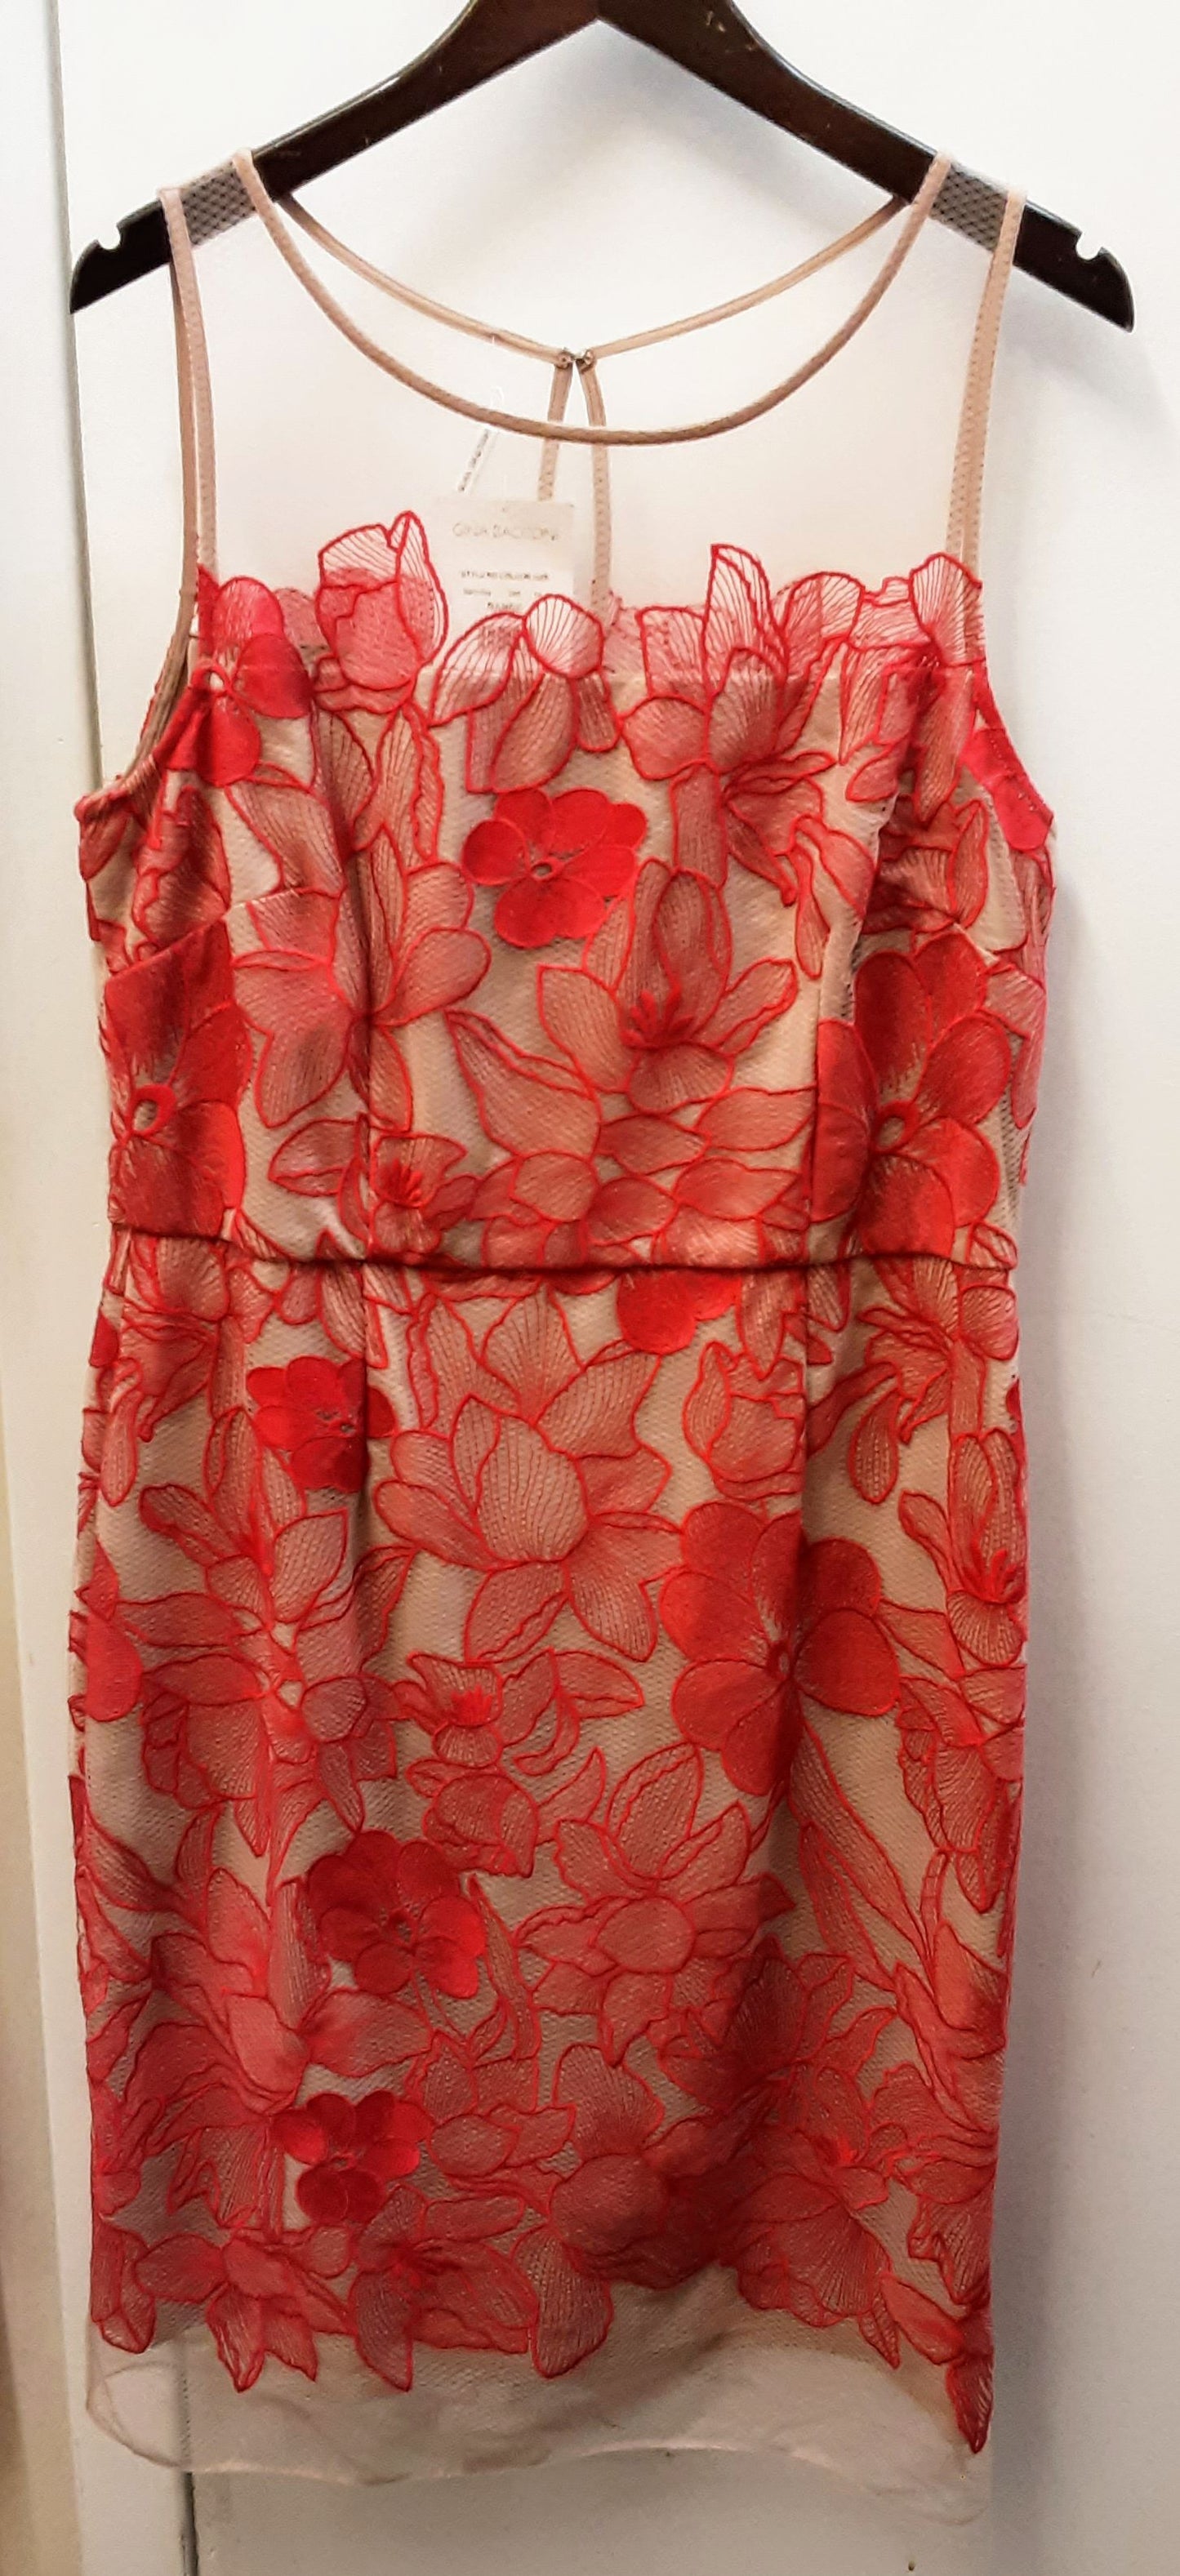 BNWT GINA BACCONI Nude & Red Sleeveless Dress RRP £260 Size 18